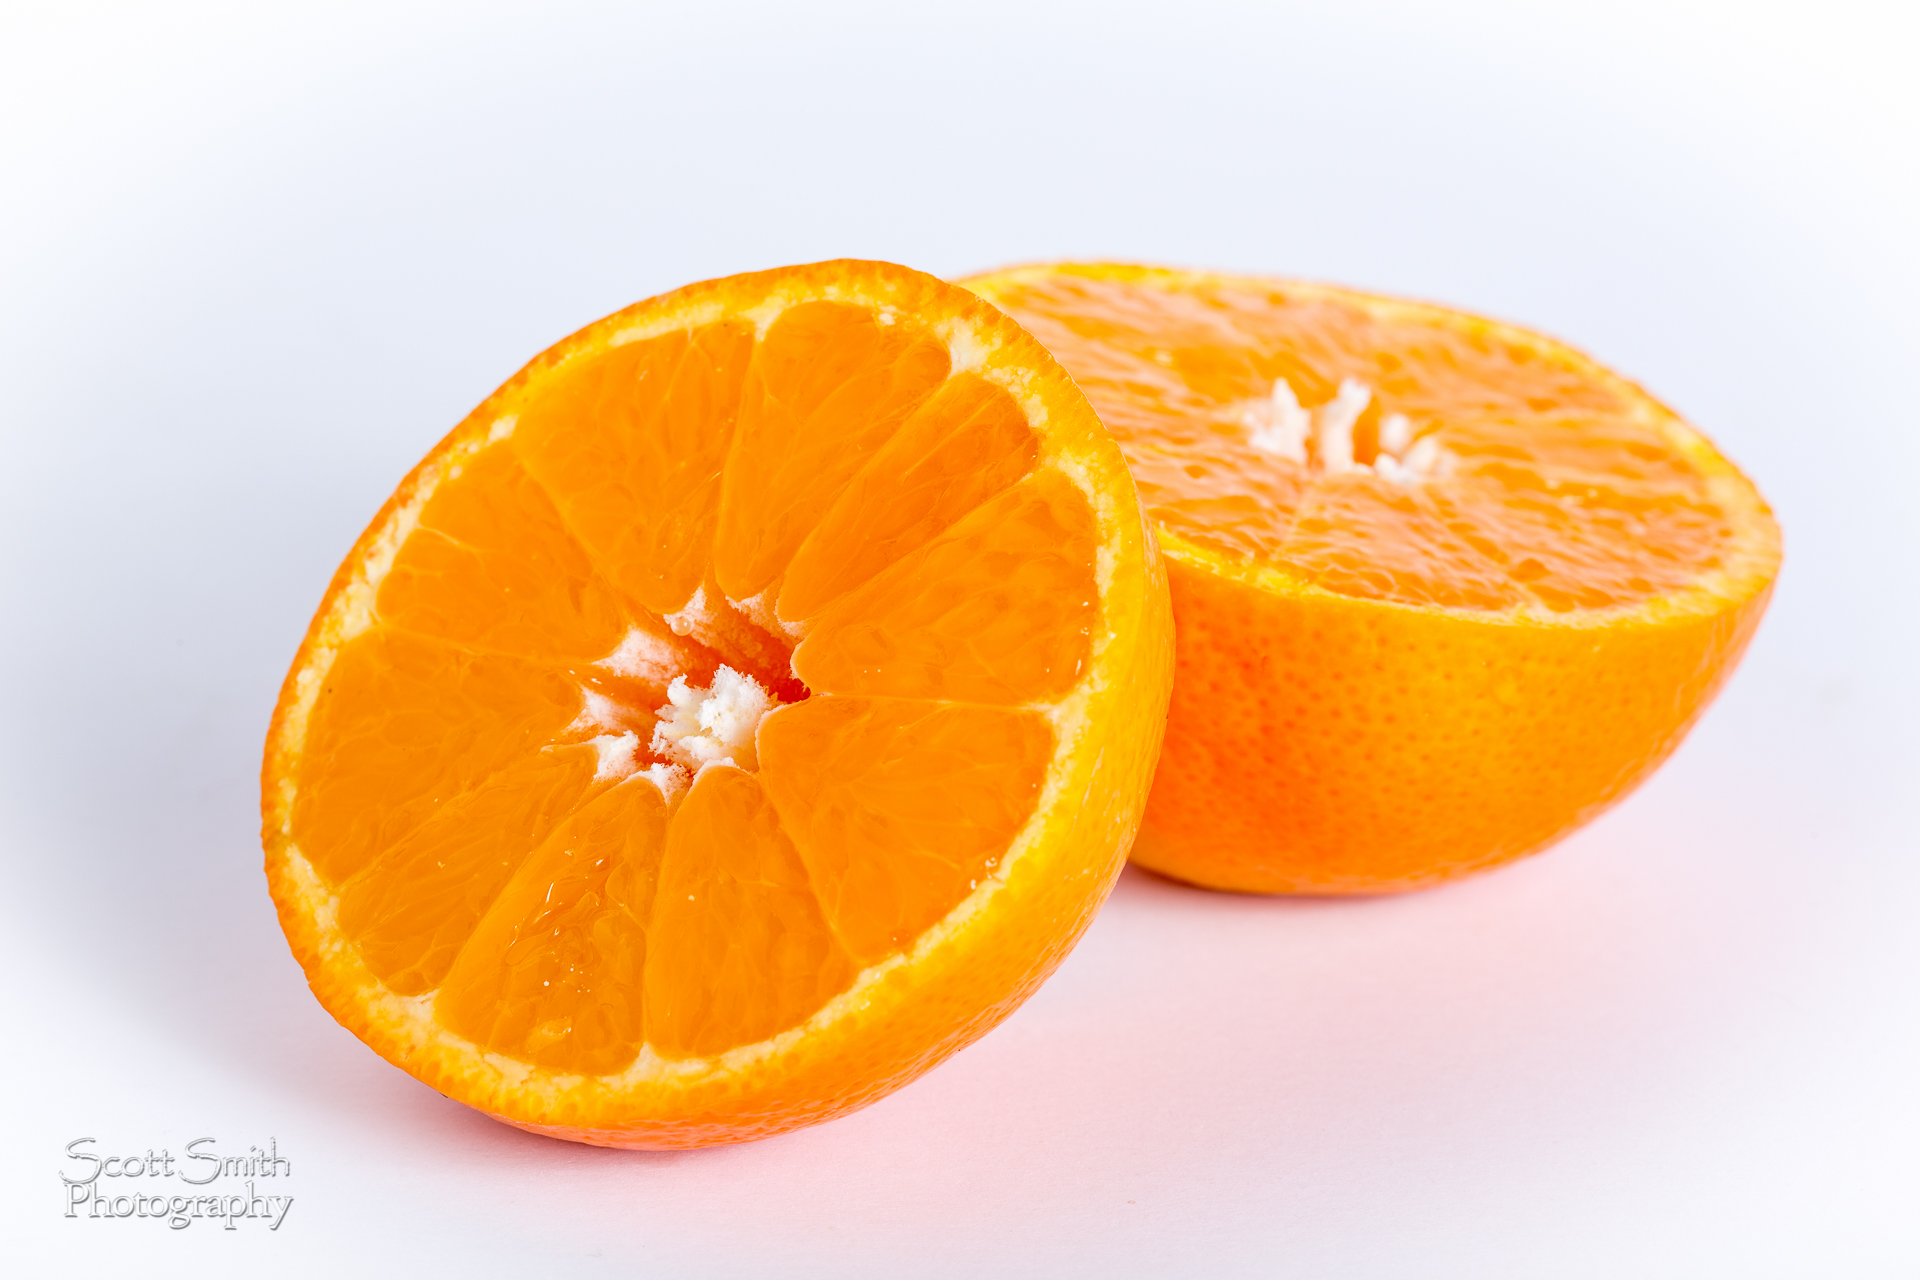 Orange Halves -  by Scott Smith Photos